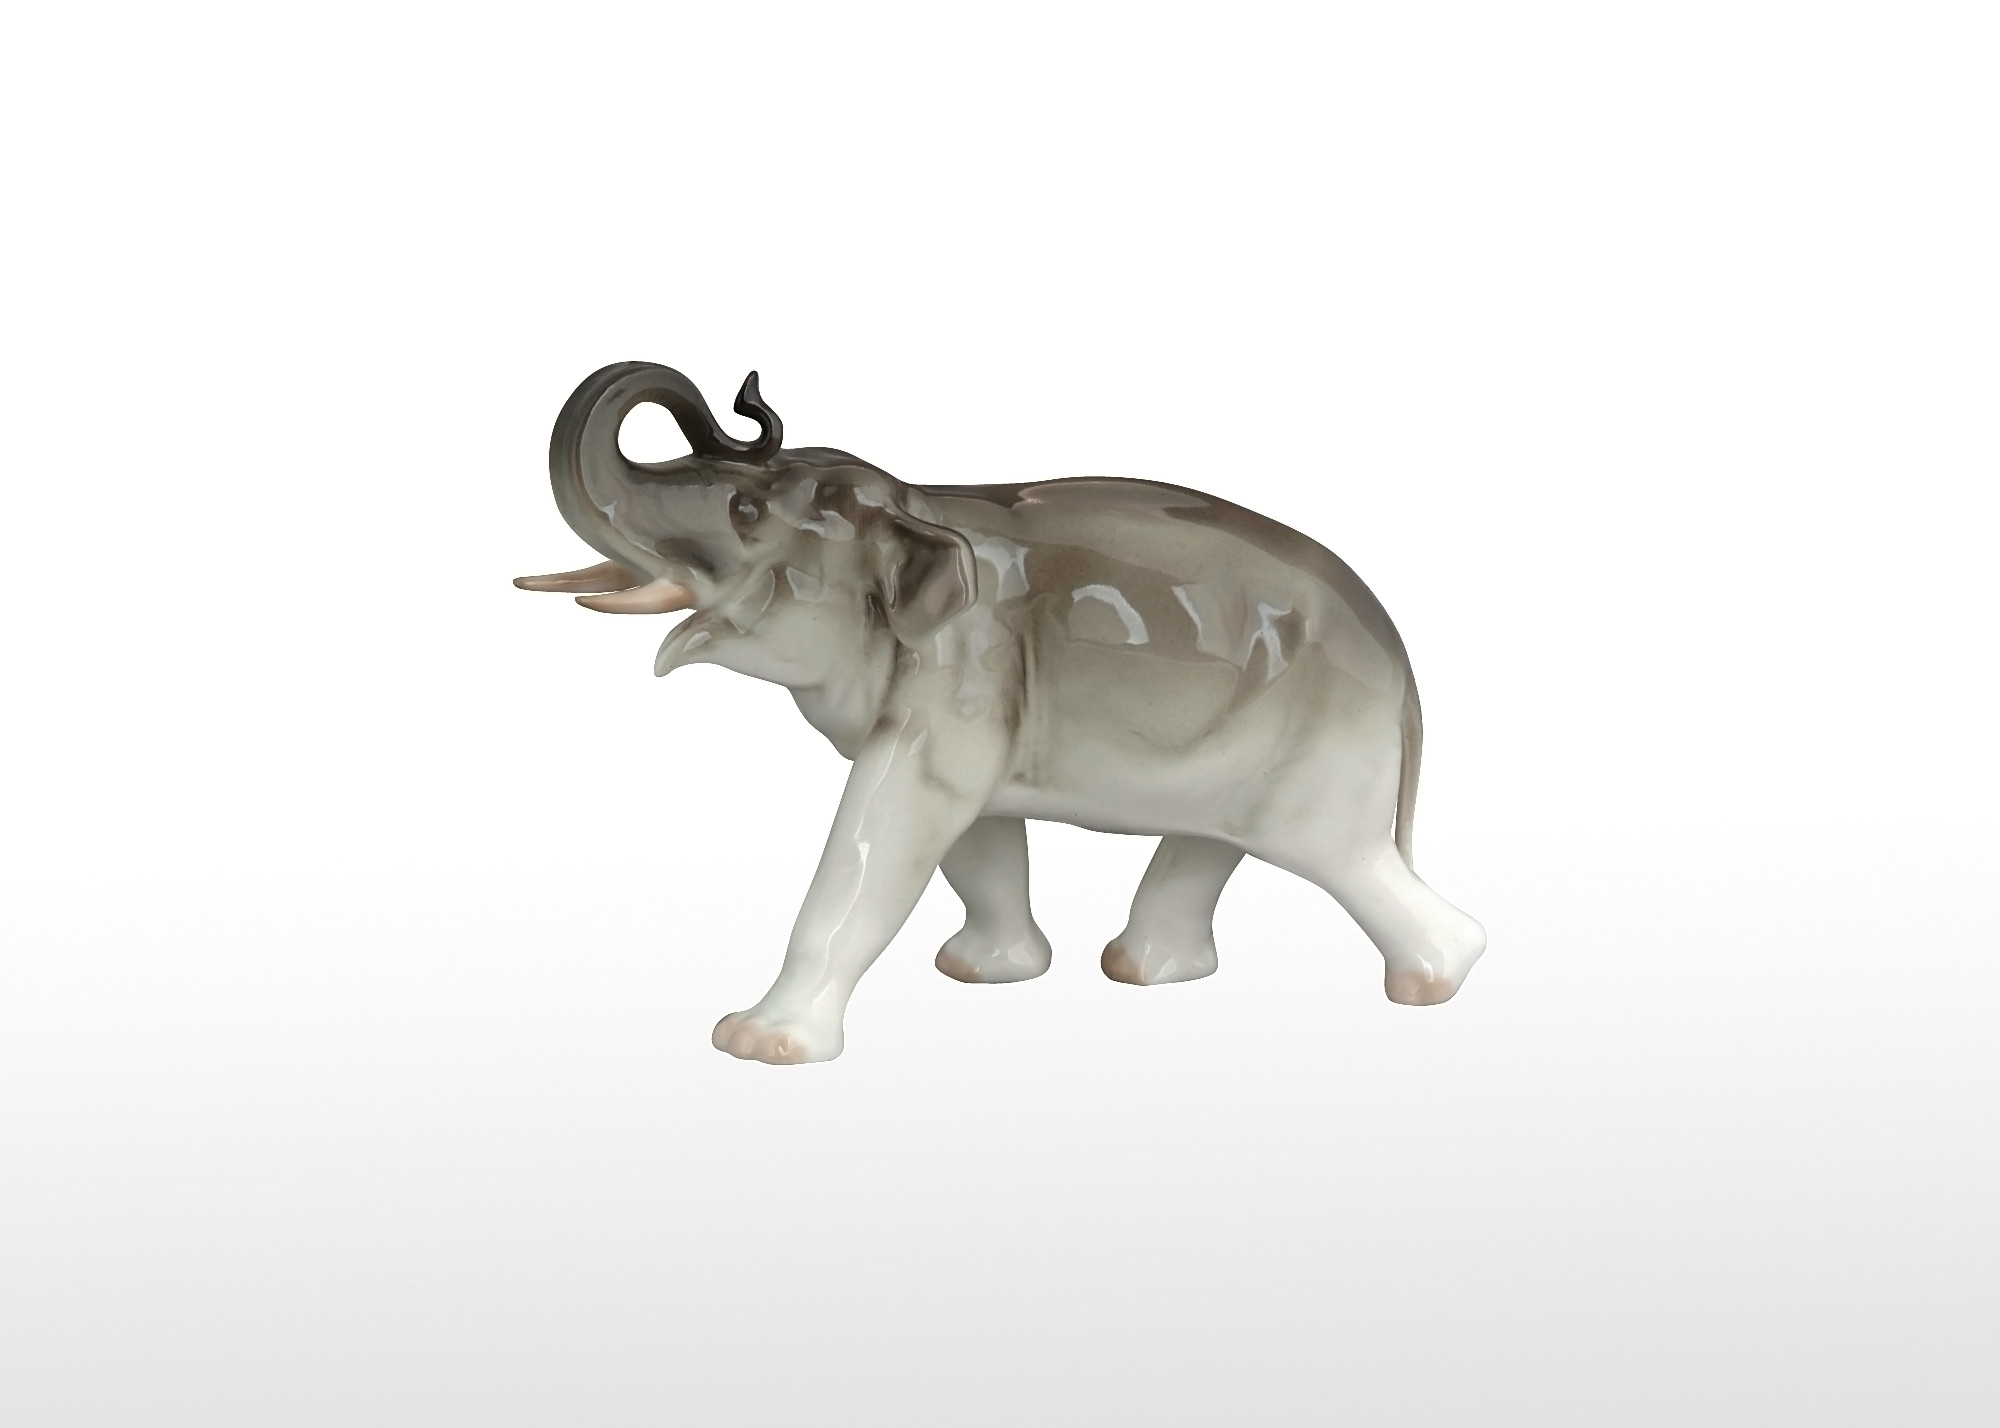 Buy Standing Elephant Figurine at GoldenCockerel.com